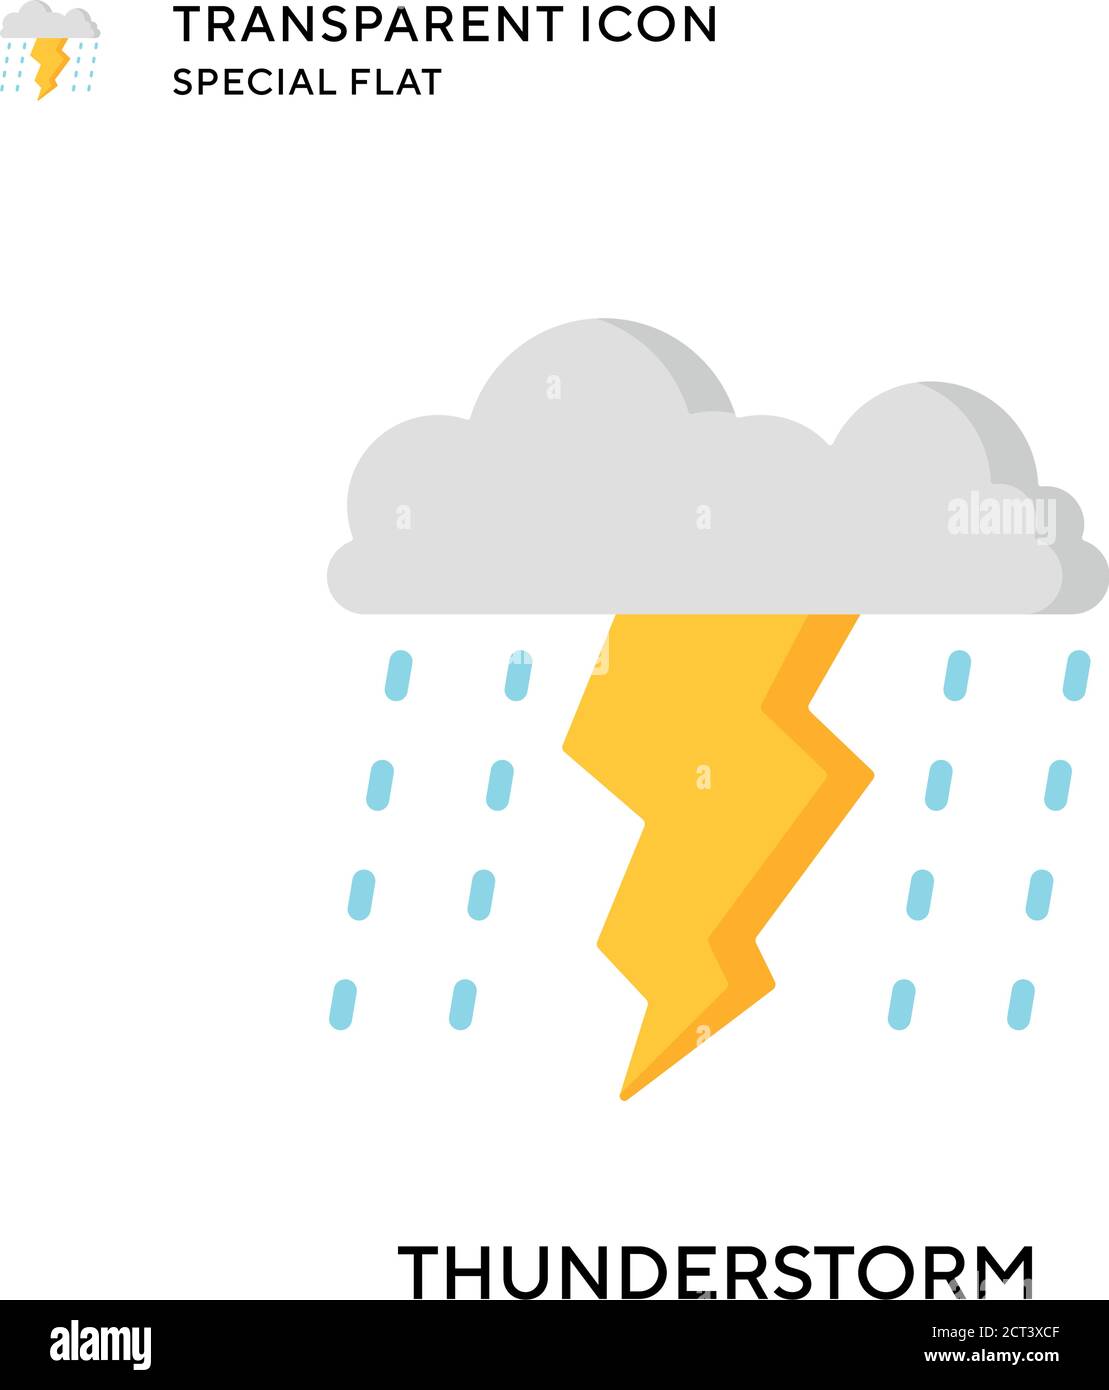 Thunderstorm vector icon. Flat style illustration. EPS 10 vector. Stock Vector